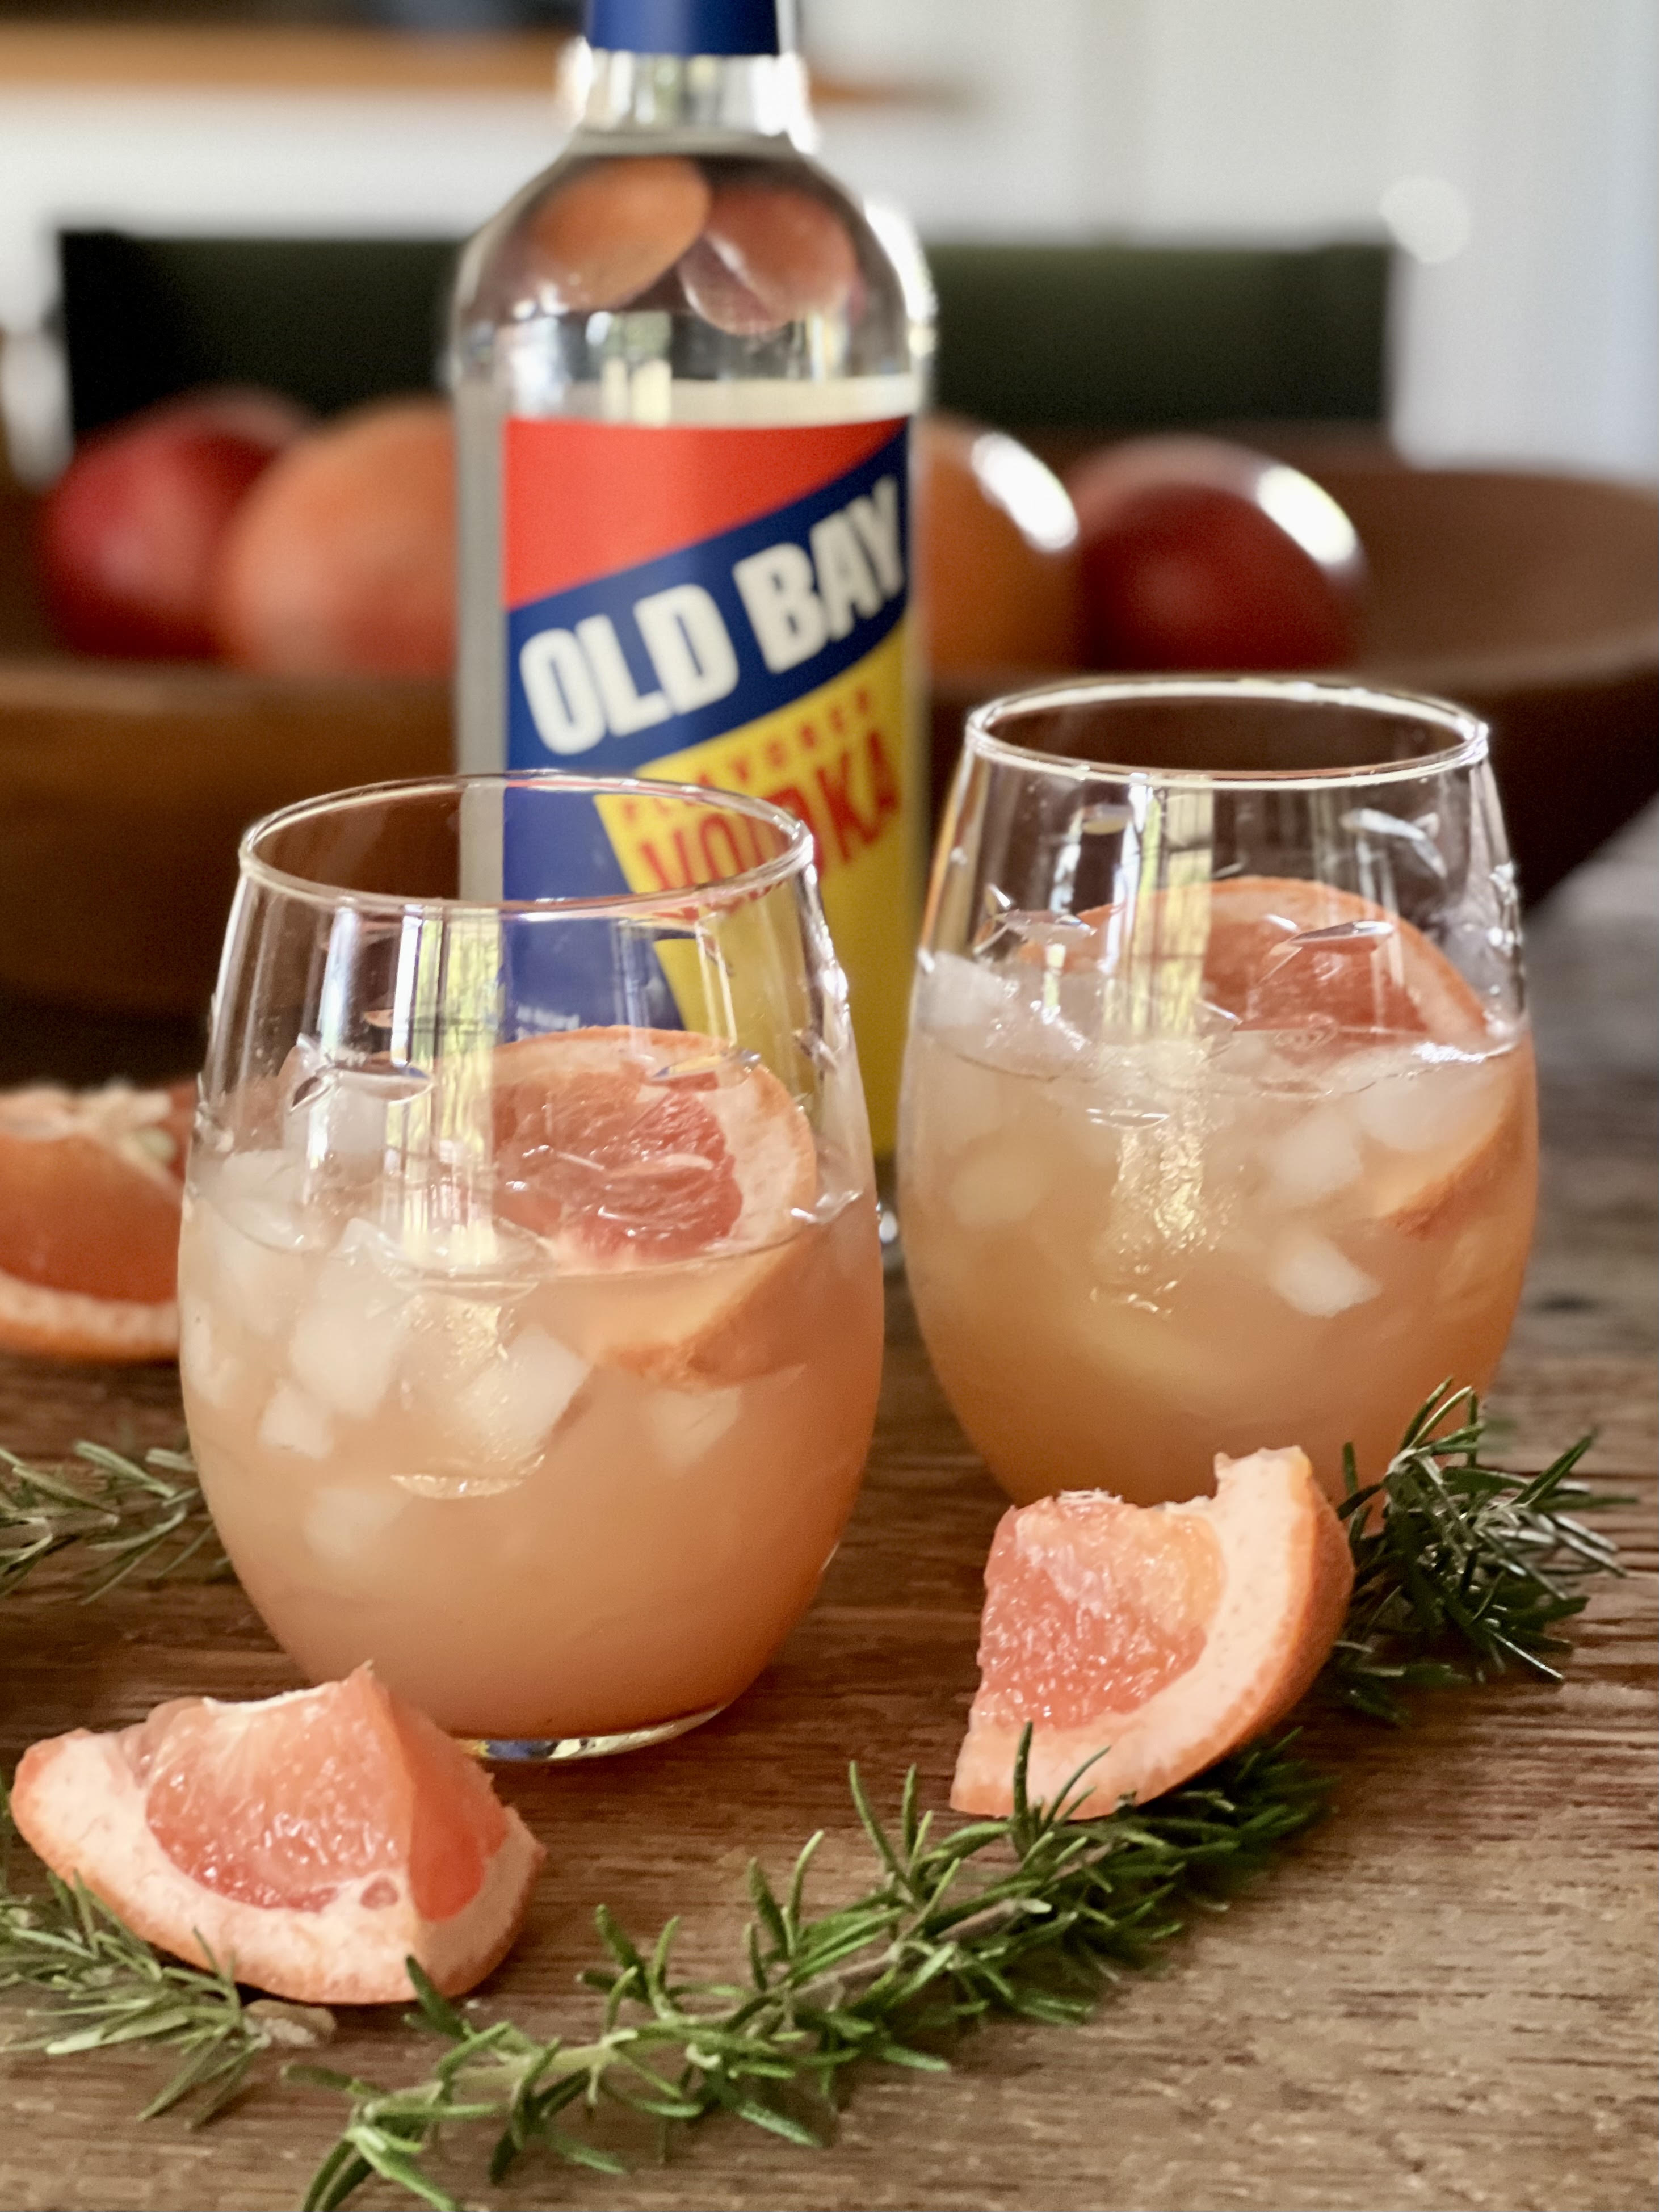 old bay vodka bottle with cocktails and grapefruit